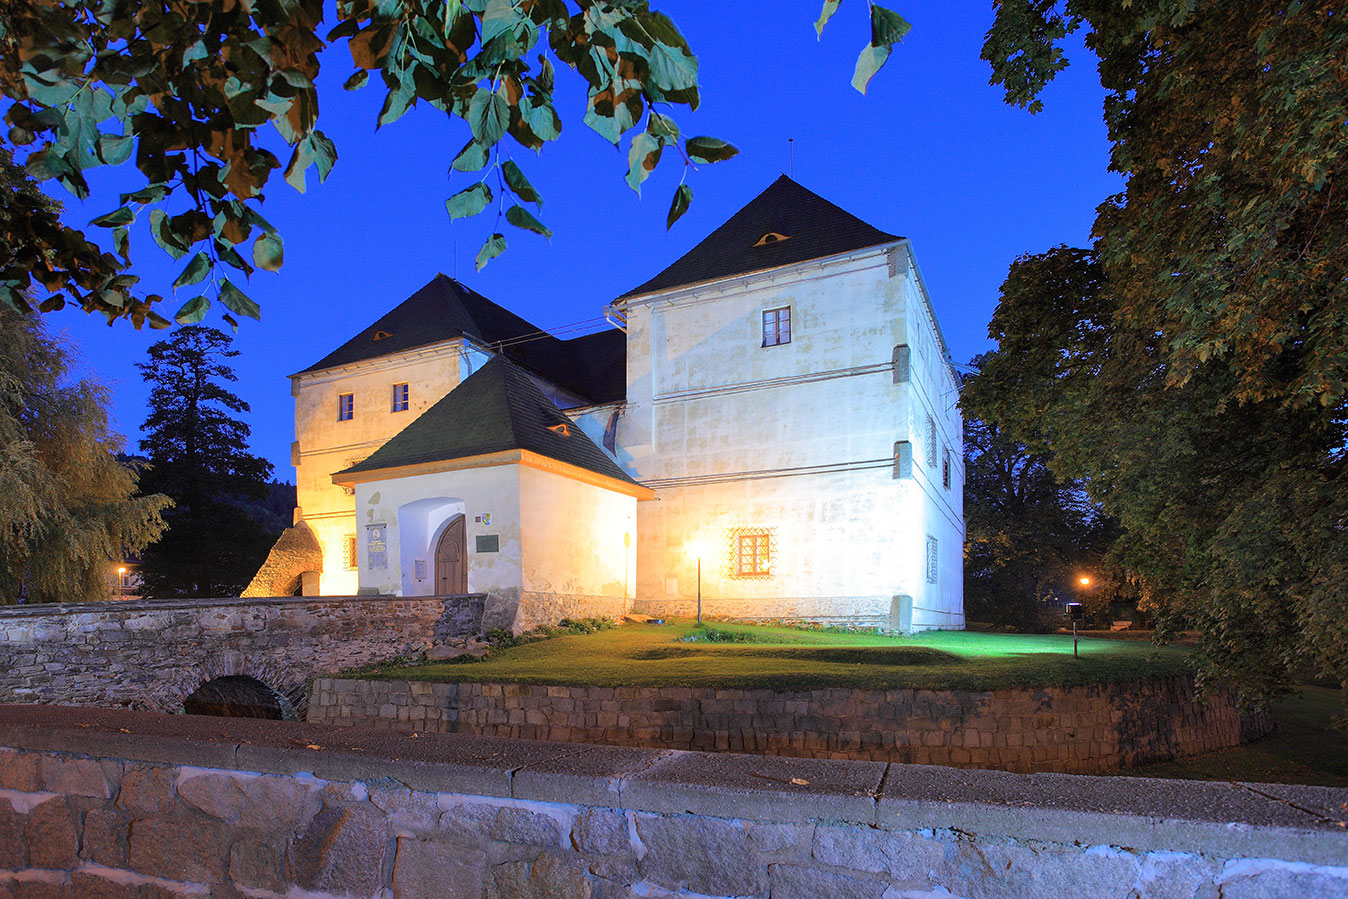 The Jeseník Local History Museum